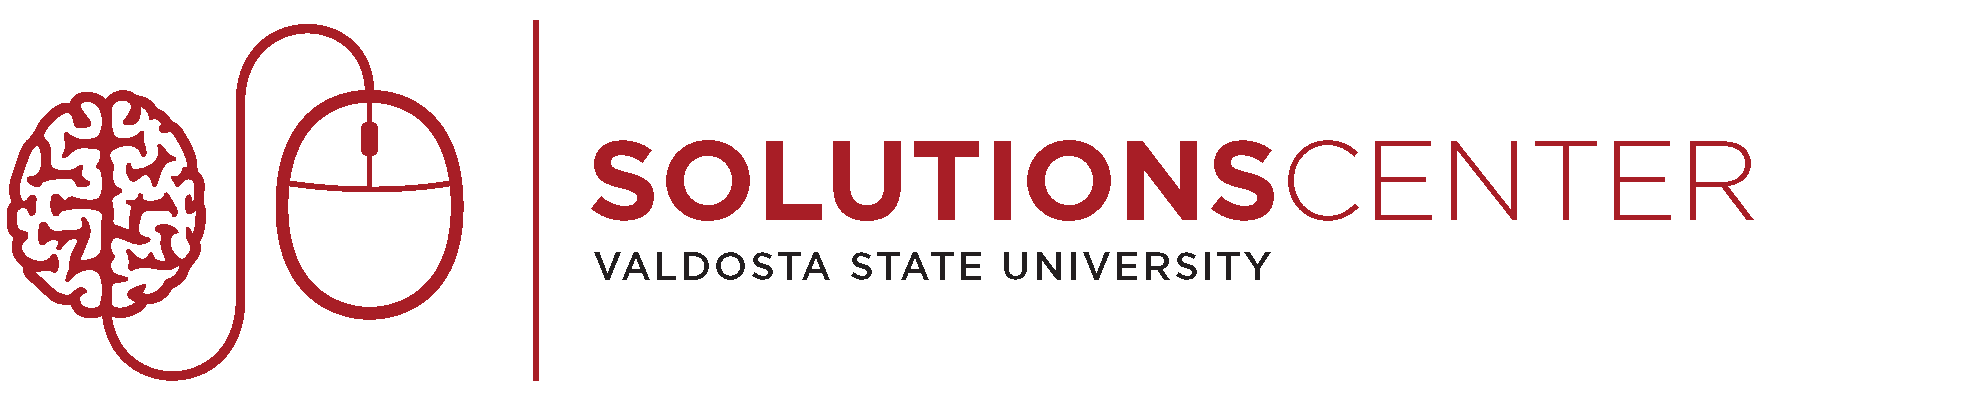 Solutions Center Valdosta State University